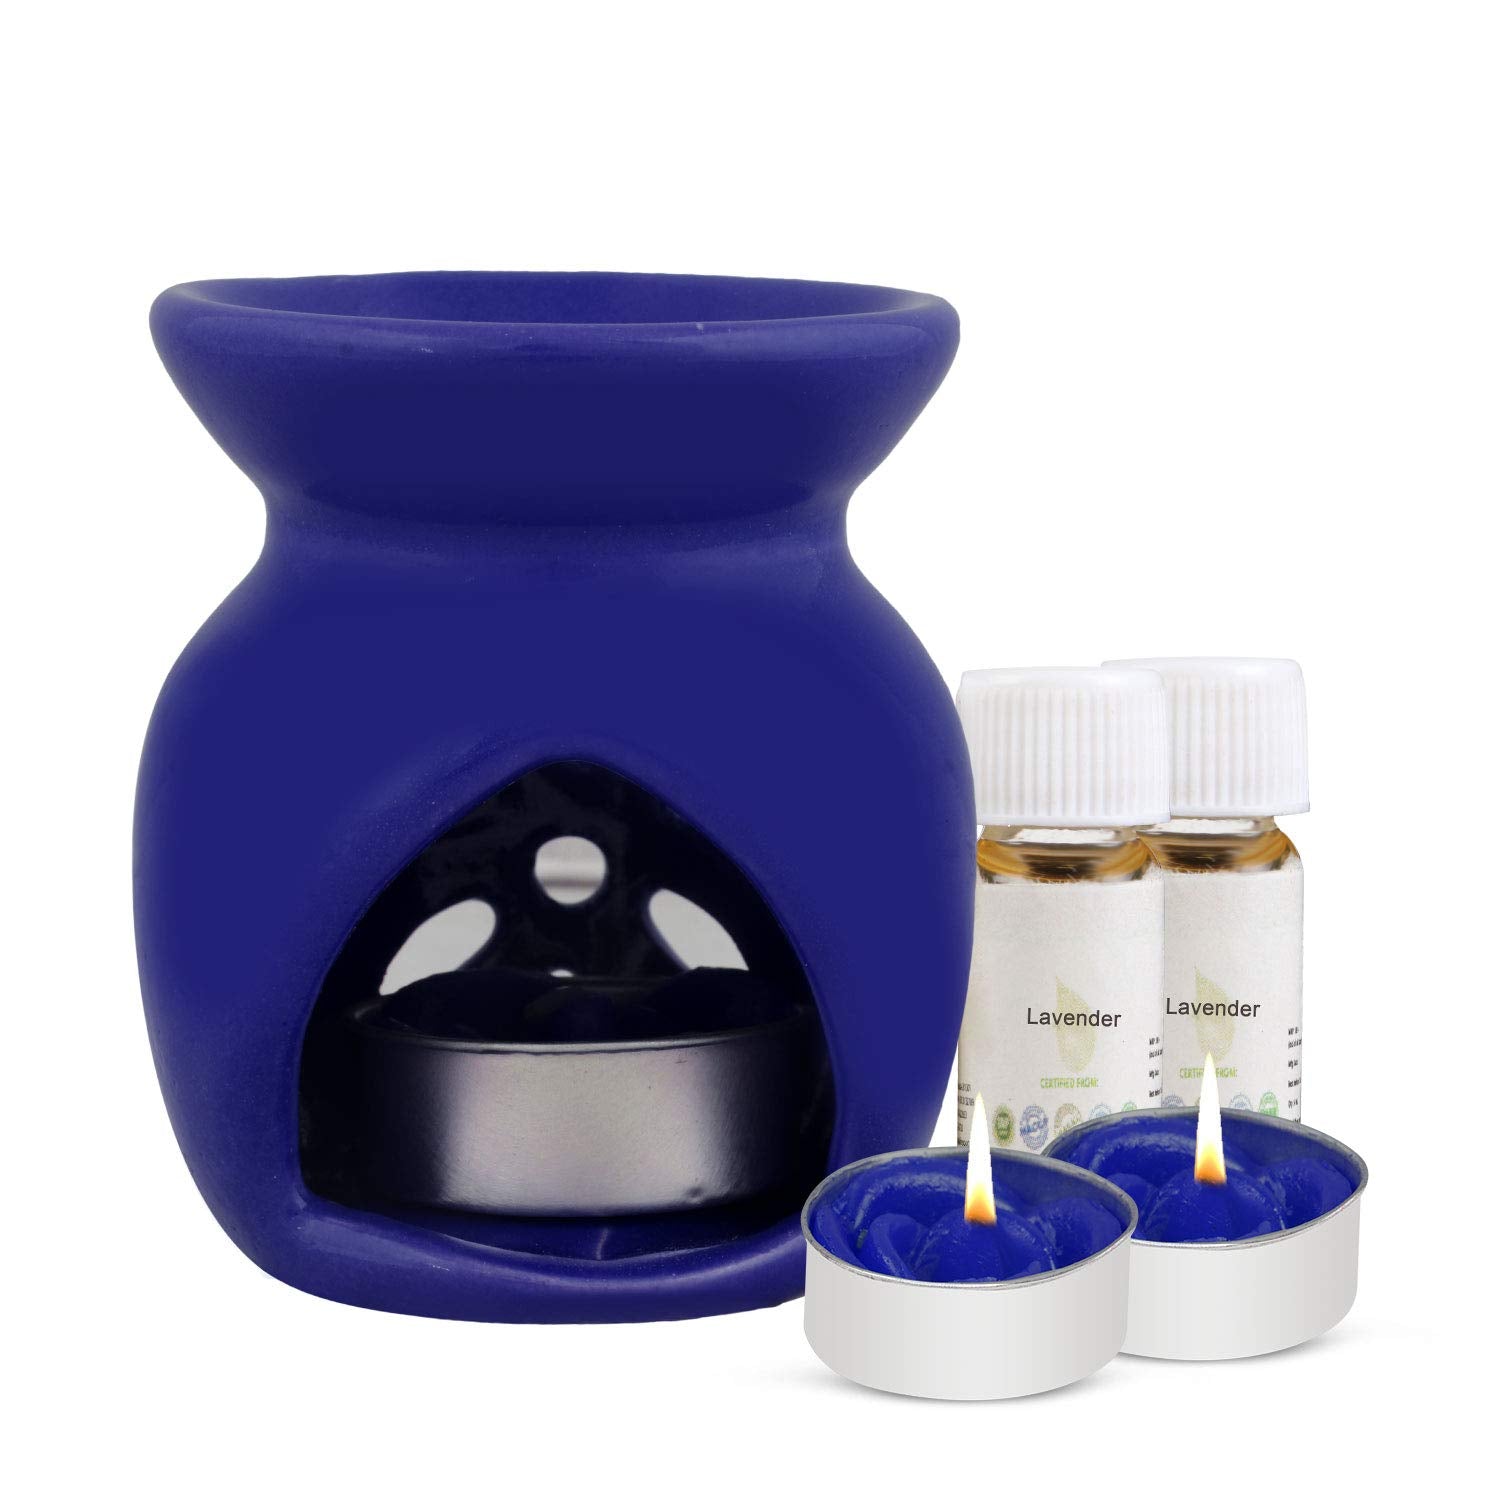 Ceramic Oil Burner Aroma Oil Diffuser for Gifting & Home Décor